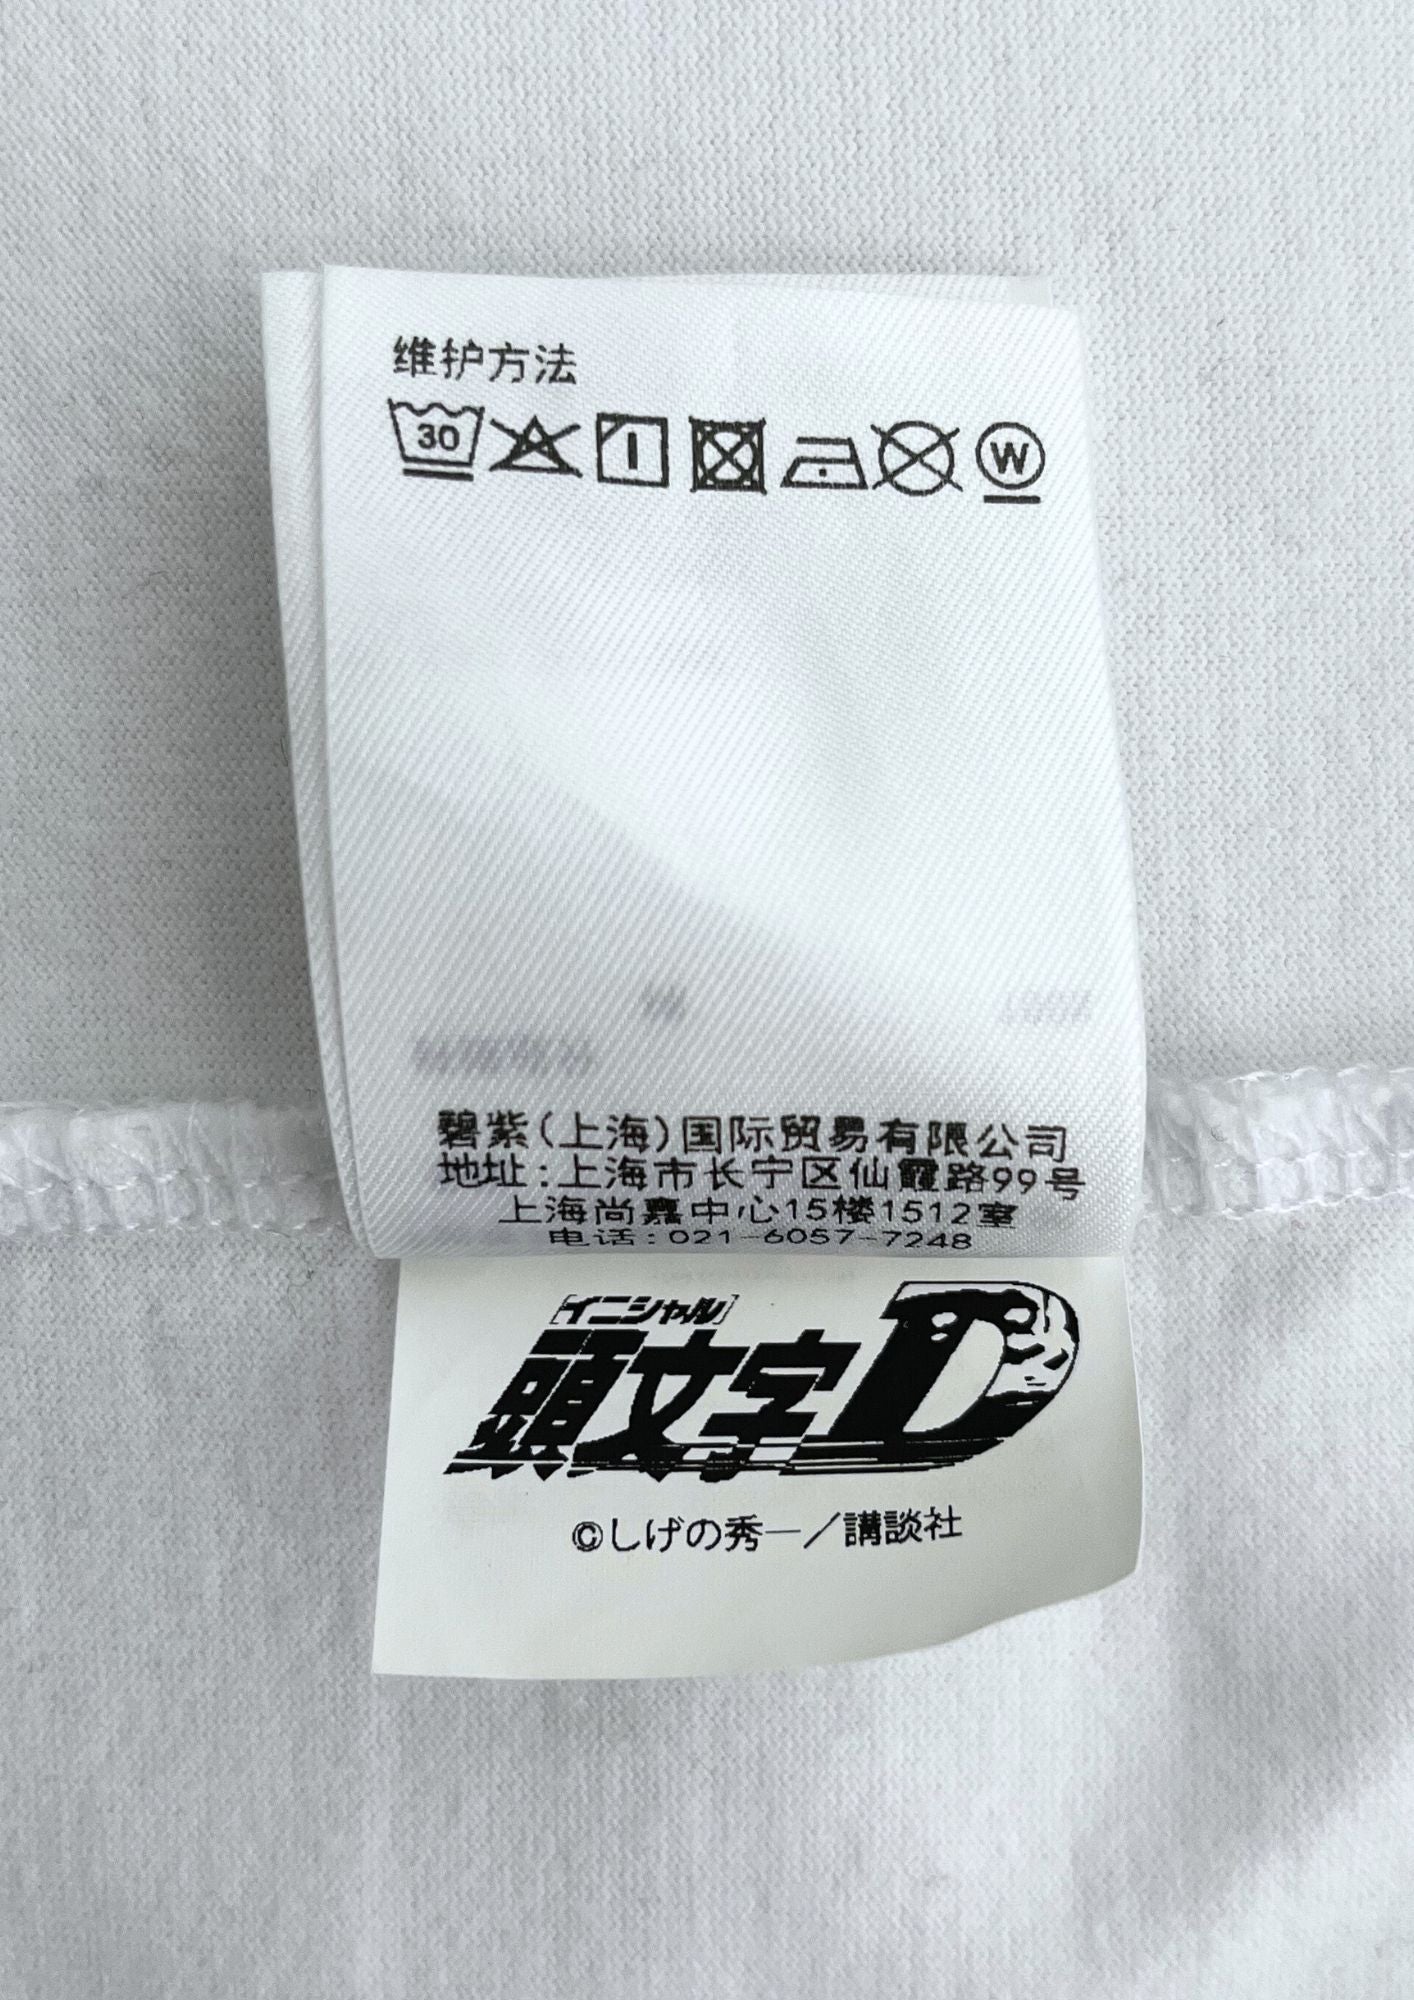 Initial D x X-Large Keisuku Long Sleeve Shirts